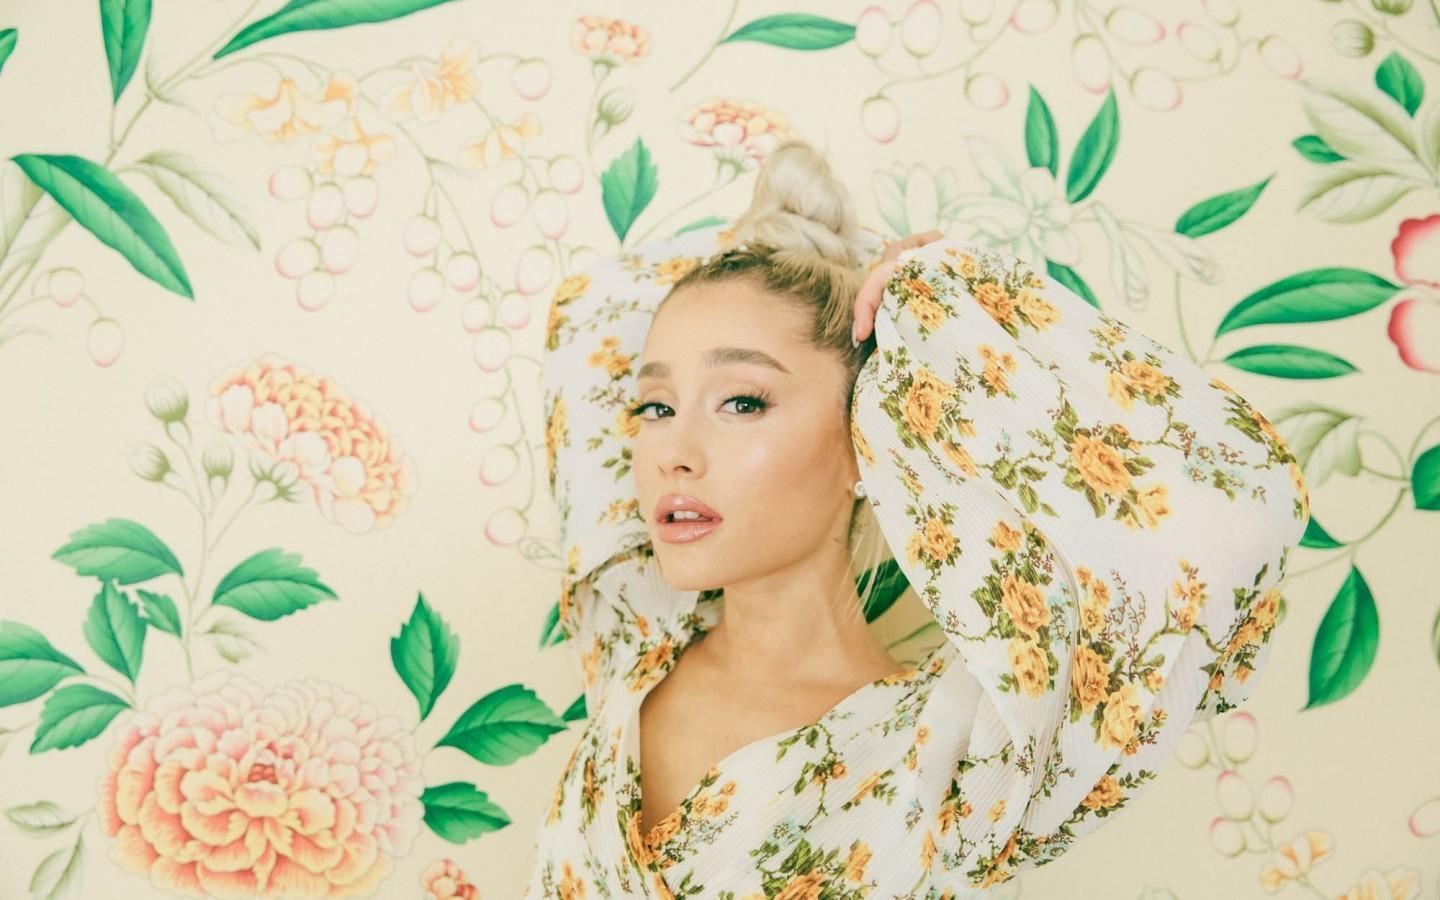 Download 1440x900 Ariana Grande, Singer, Flowers, Celebrity